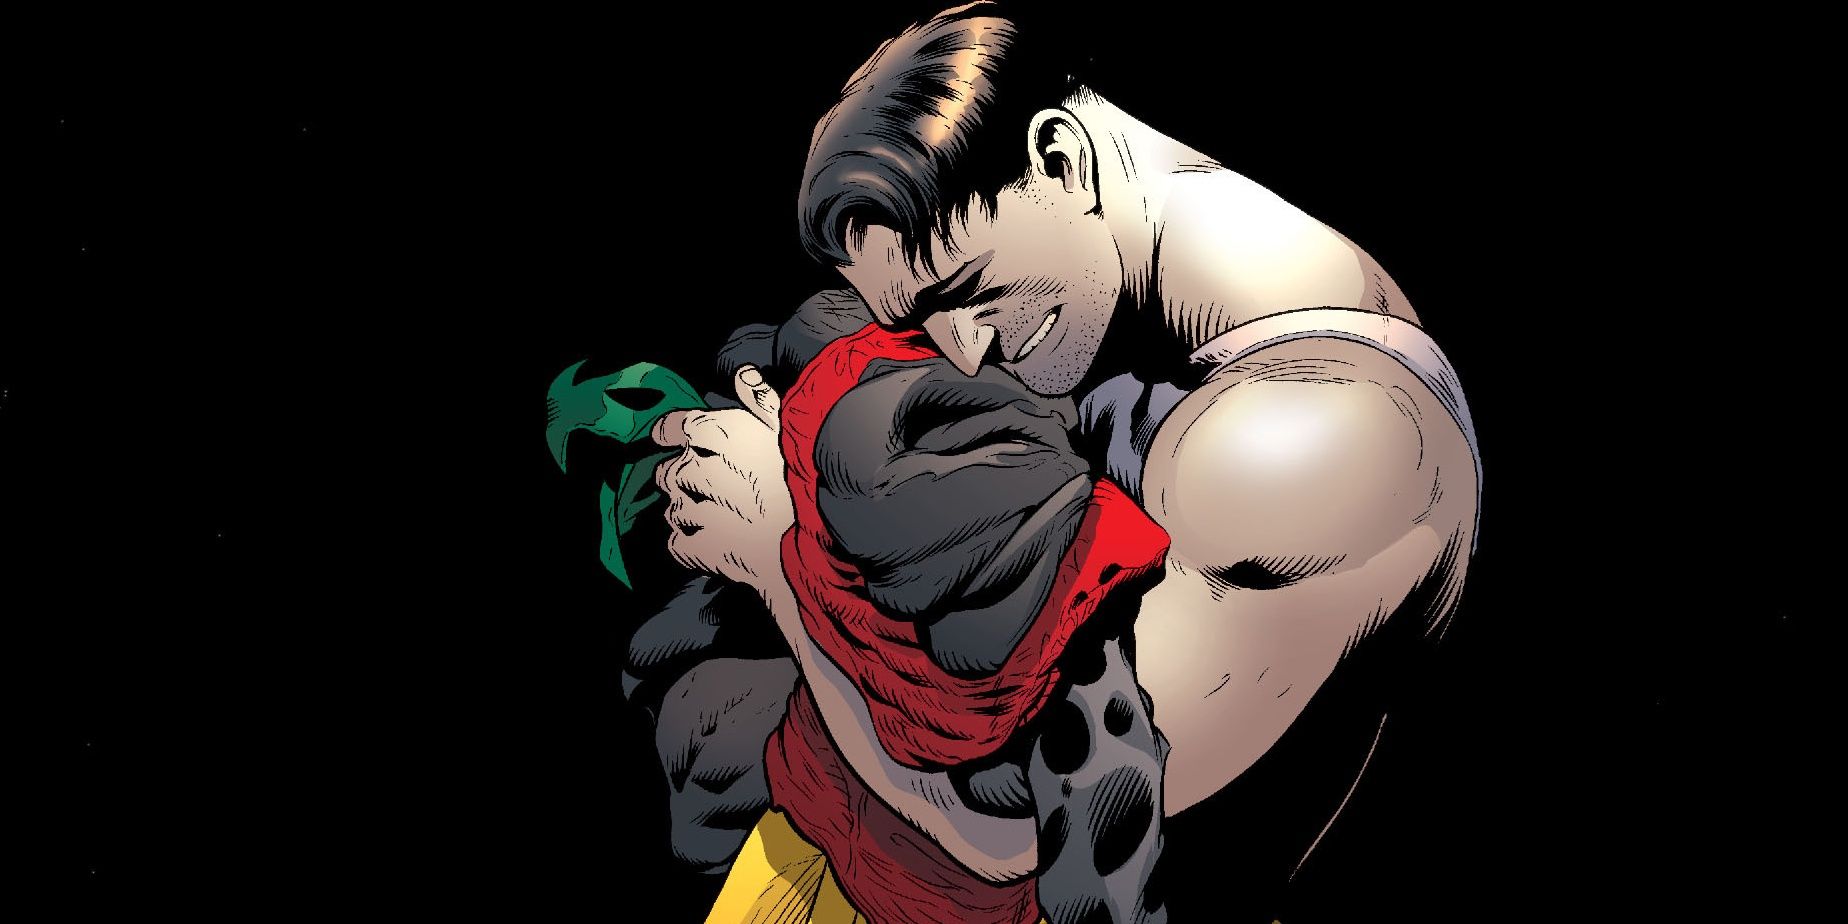 Bruce Wayne mourns Damian